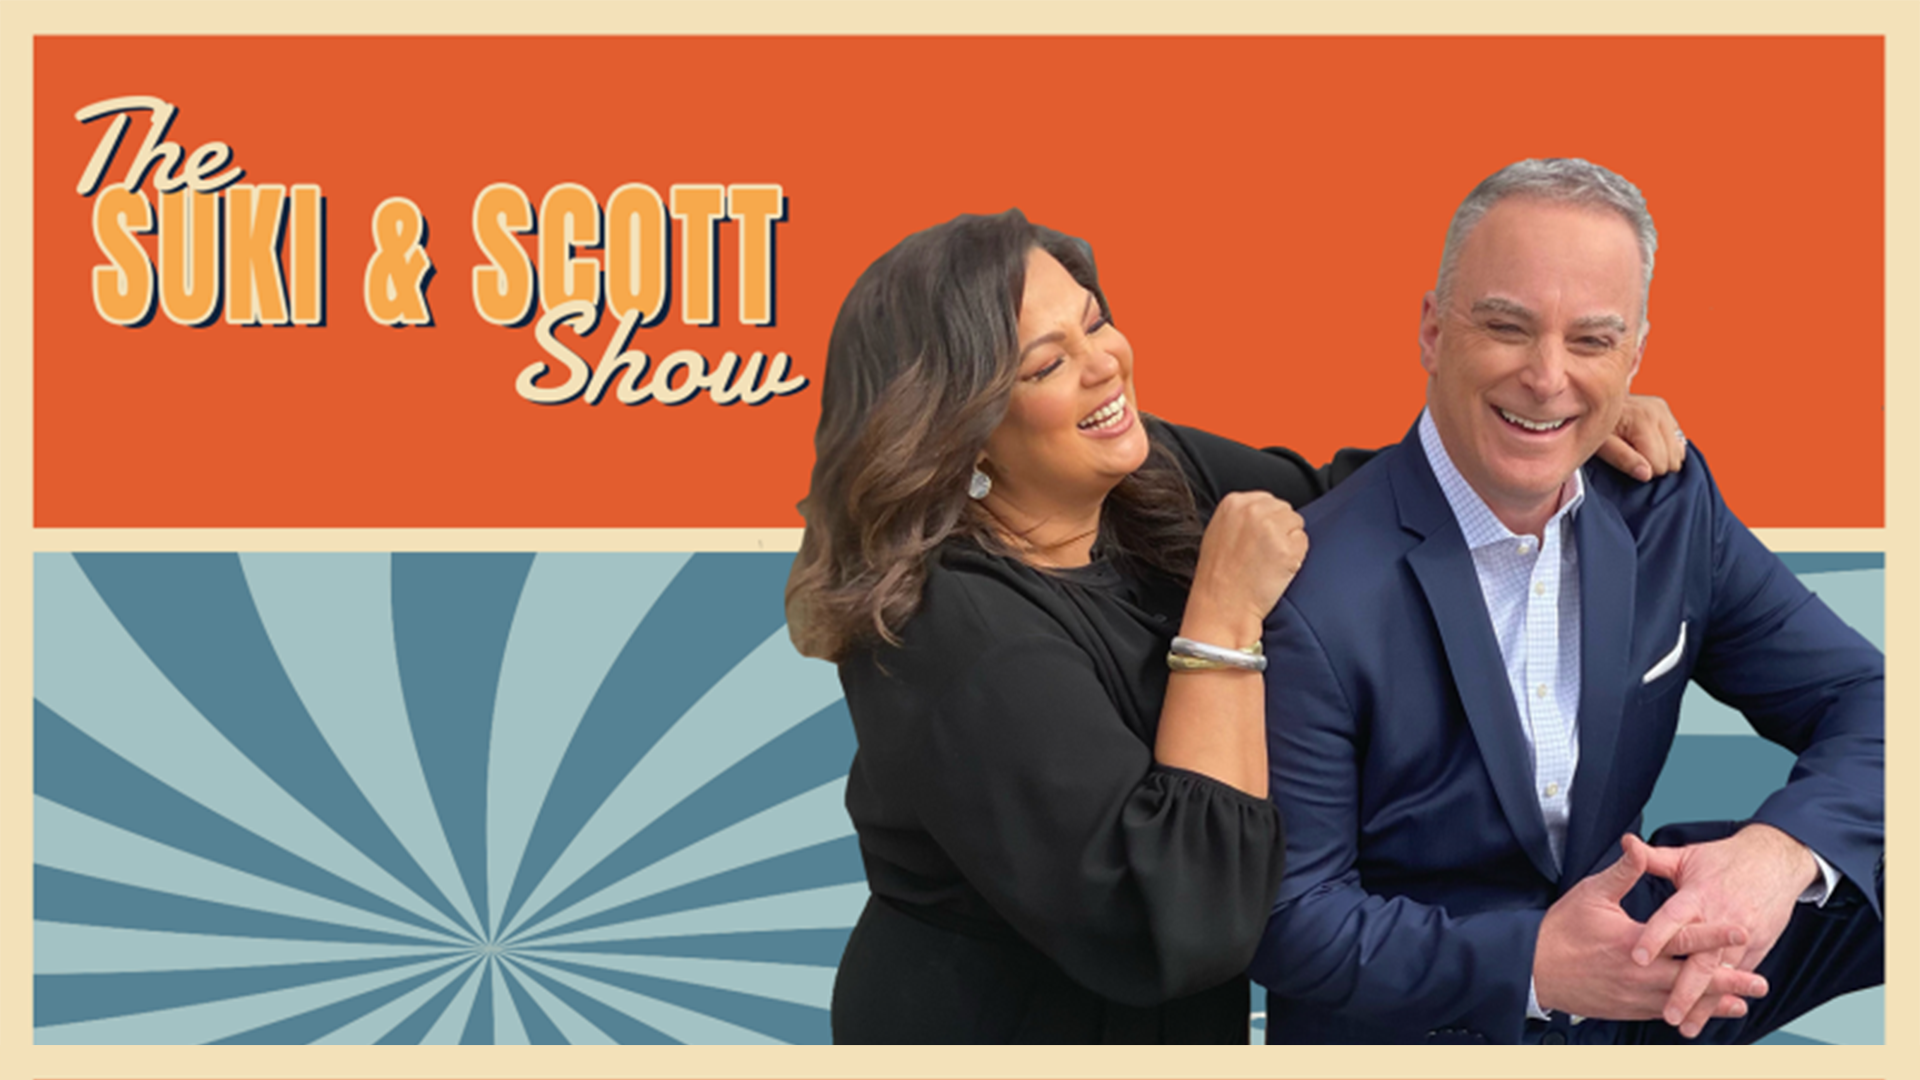 The Suki & Scott Show: Nancy Harding & Gangstagrass